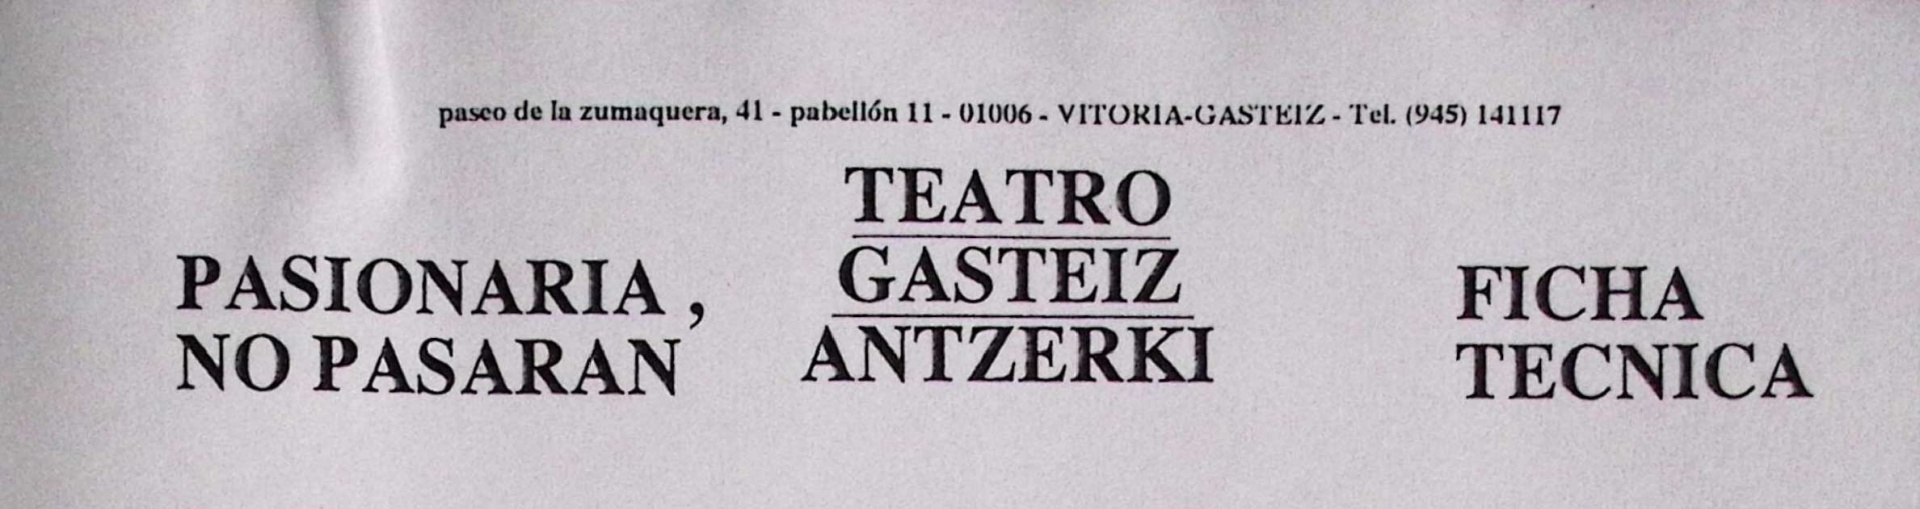 Ficha técnica. Pasionaria, no pasarán. Teatro Gasteiz Antzerki